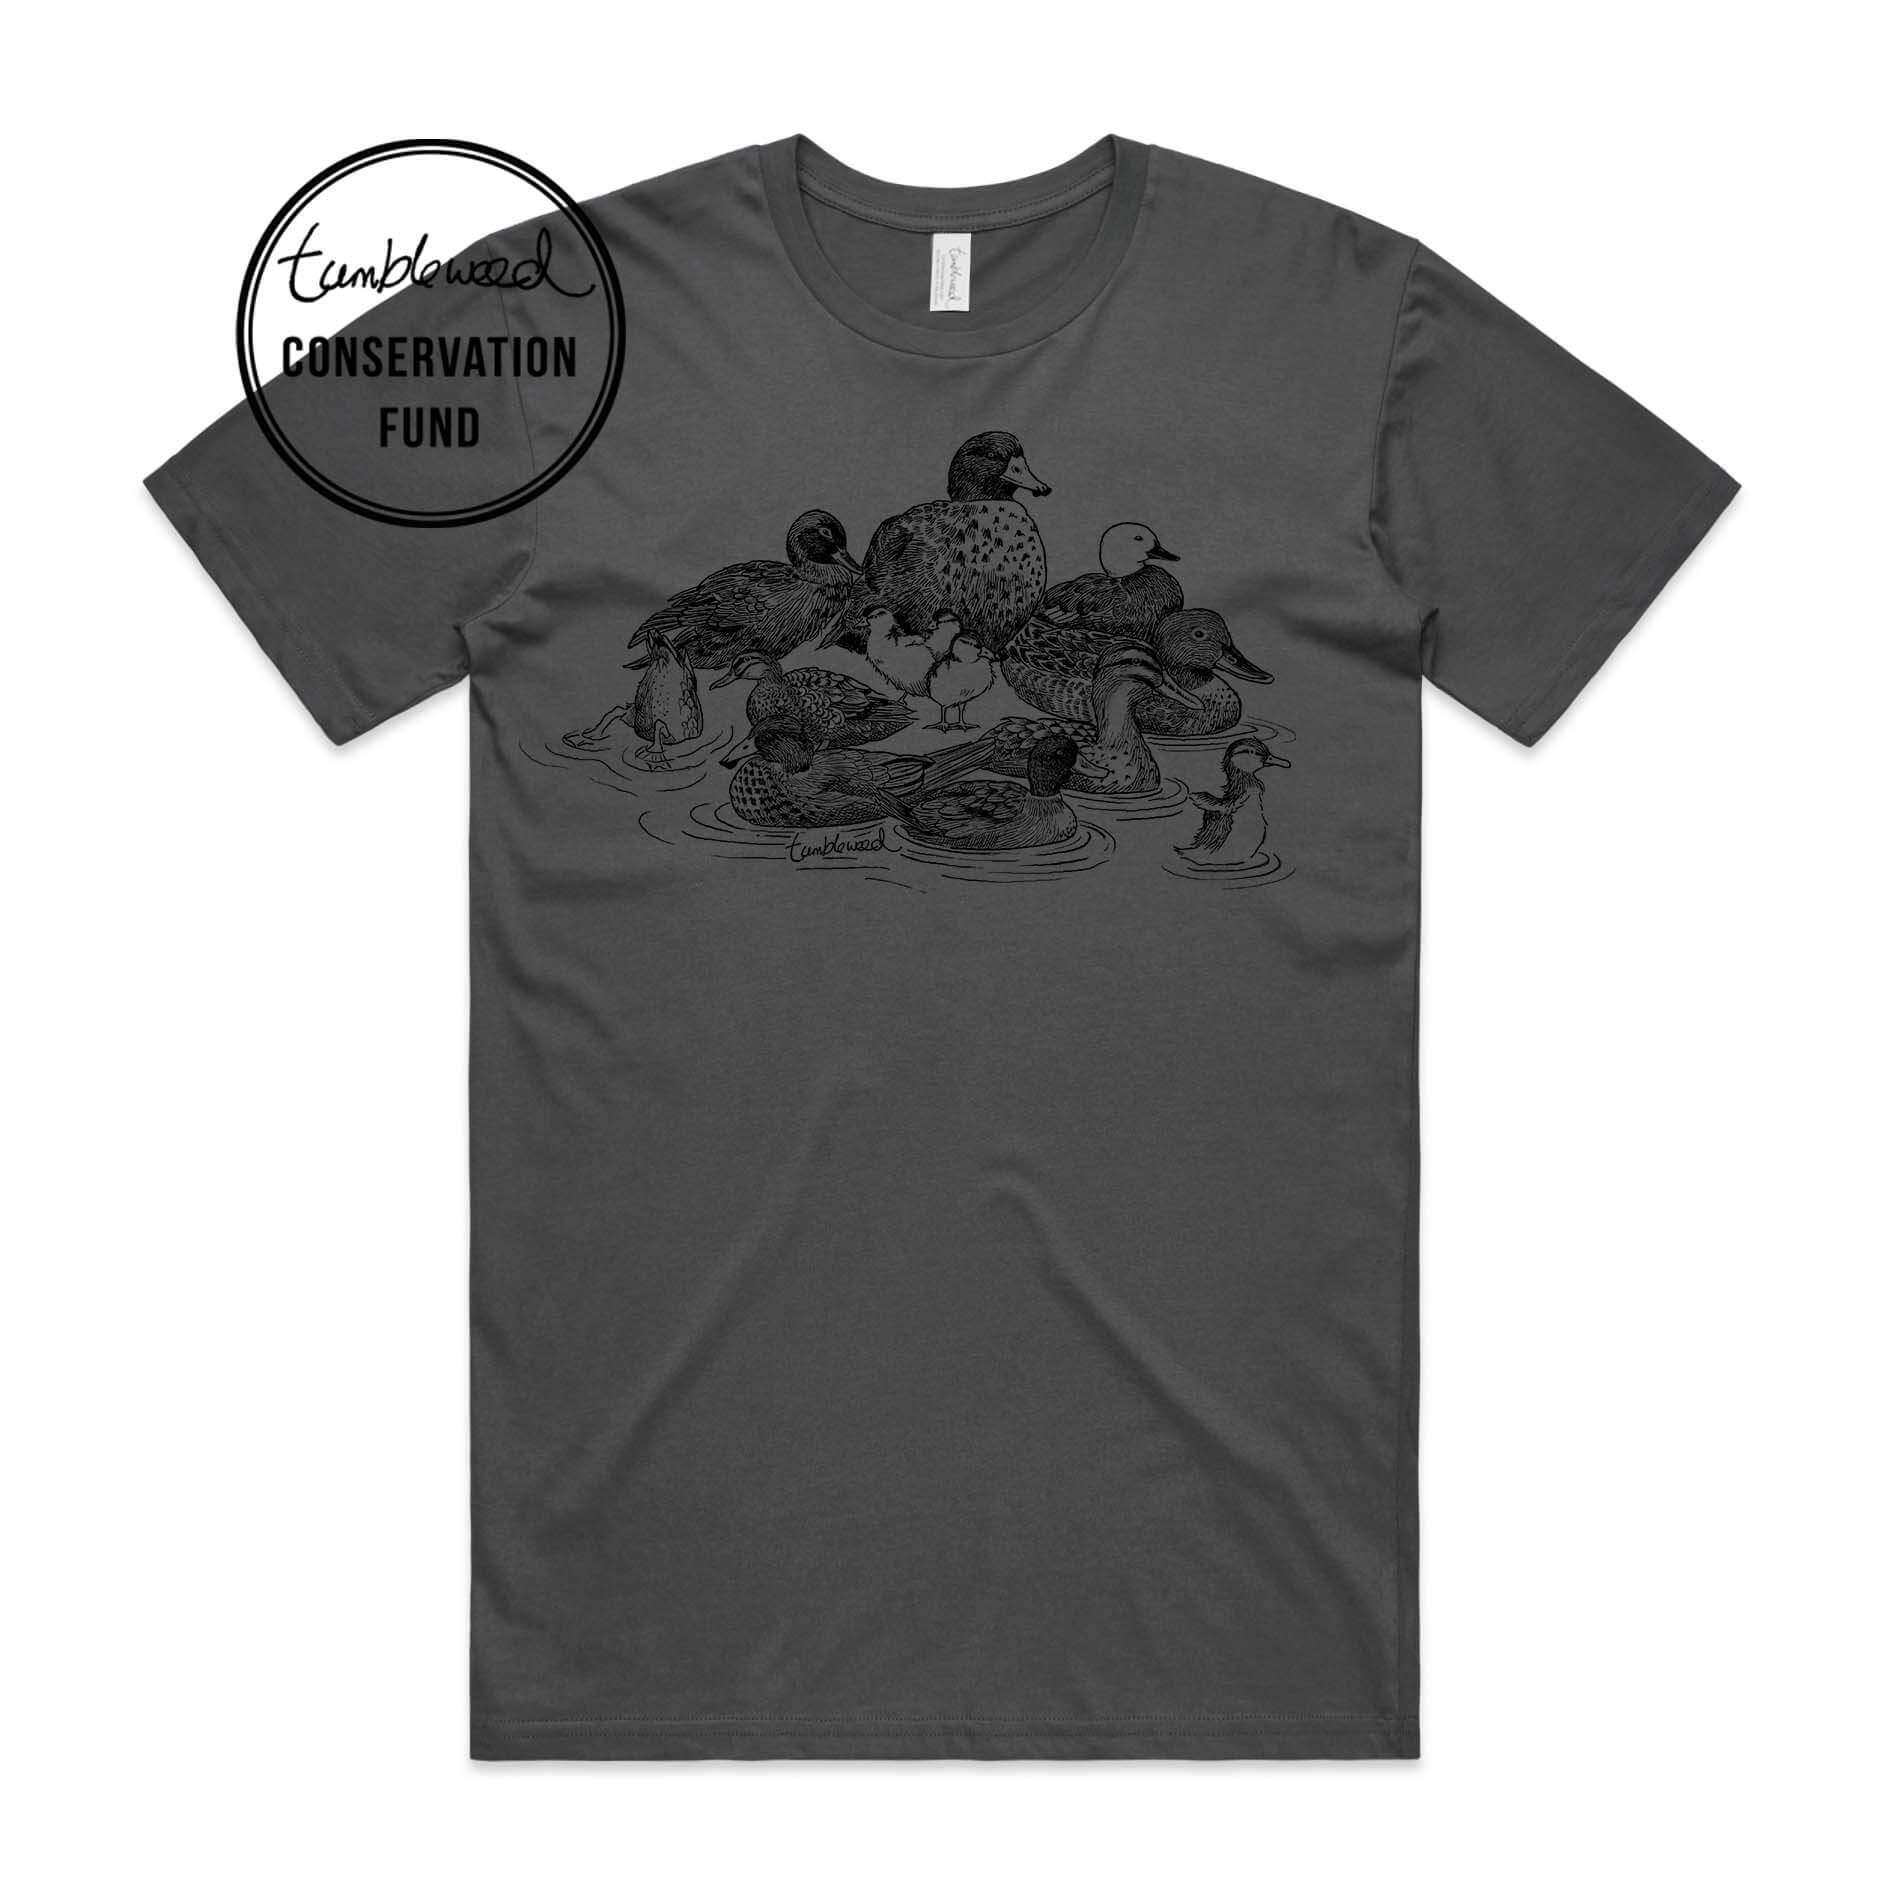 Charcoal, female t-shirt featuring a screen printed NZ Ducks design.